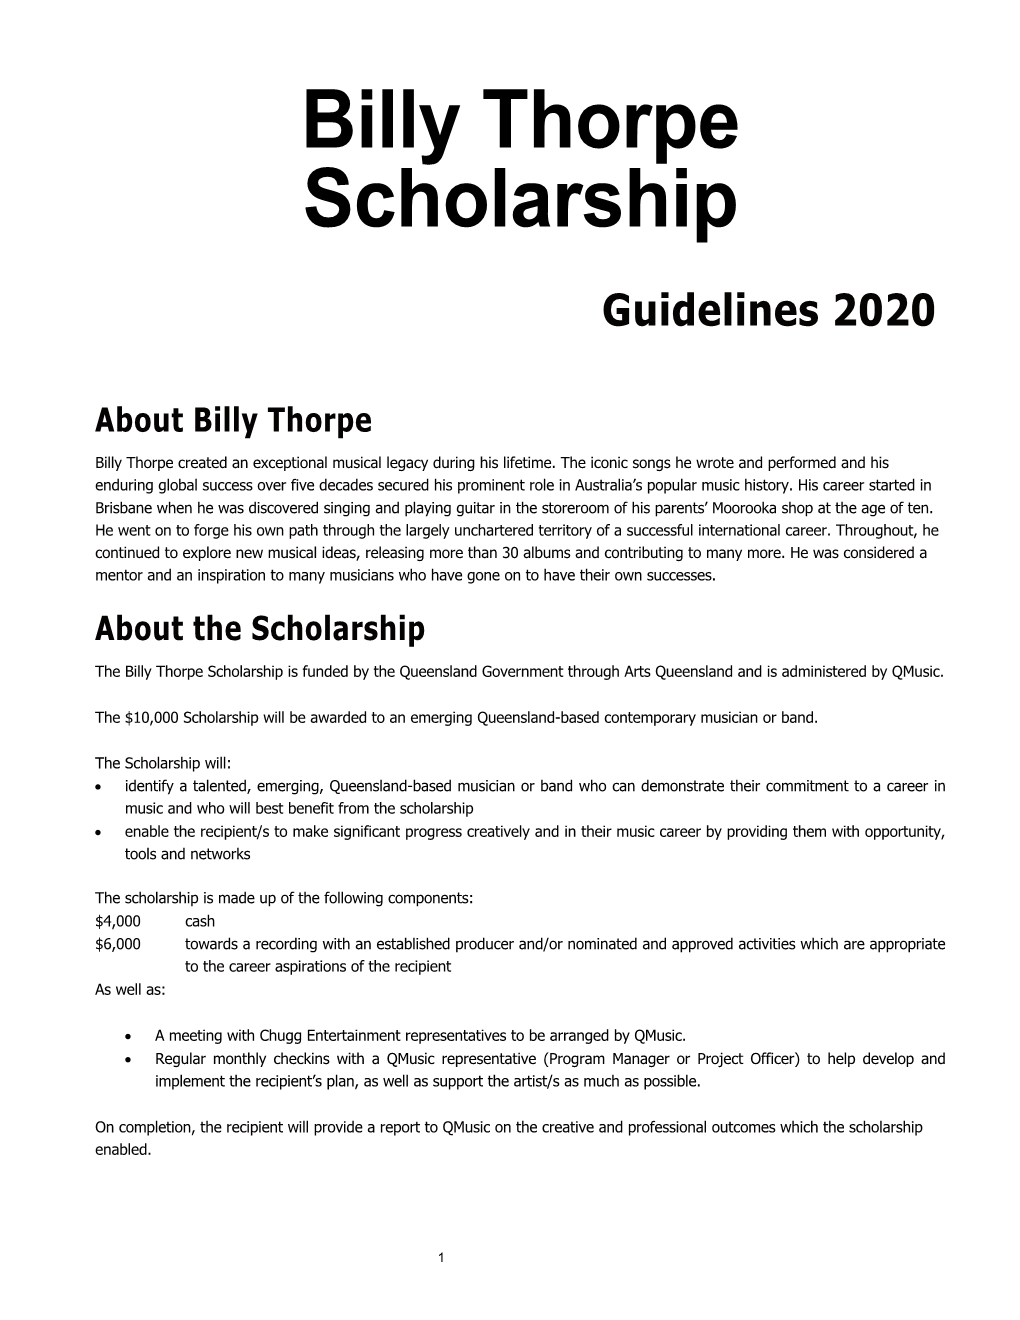 Billy Thorpe Scholarship